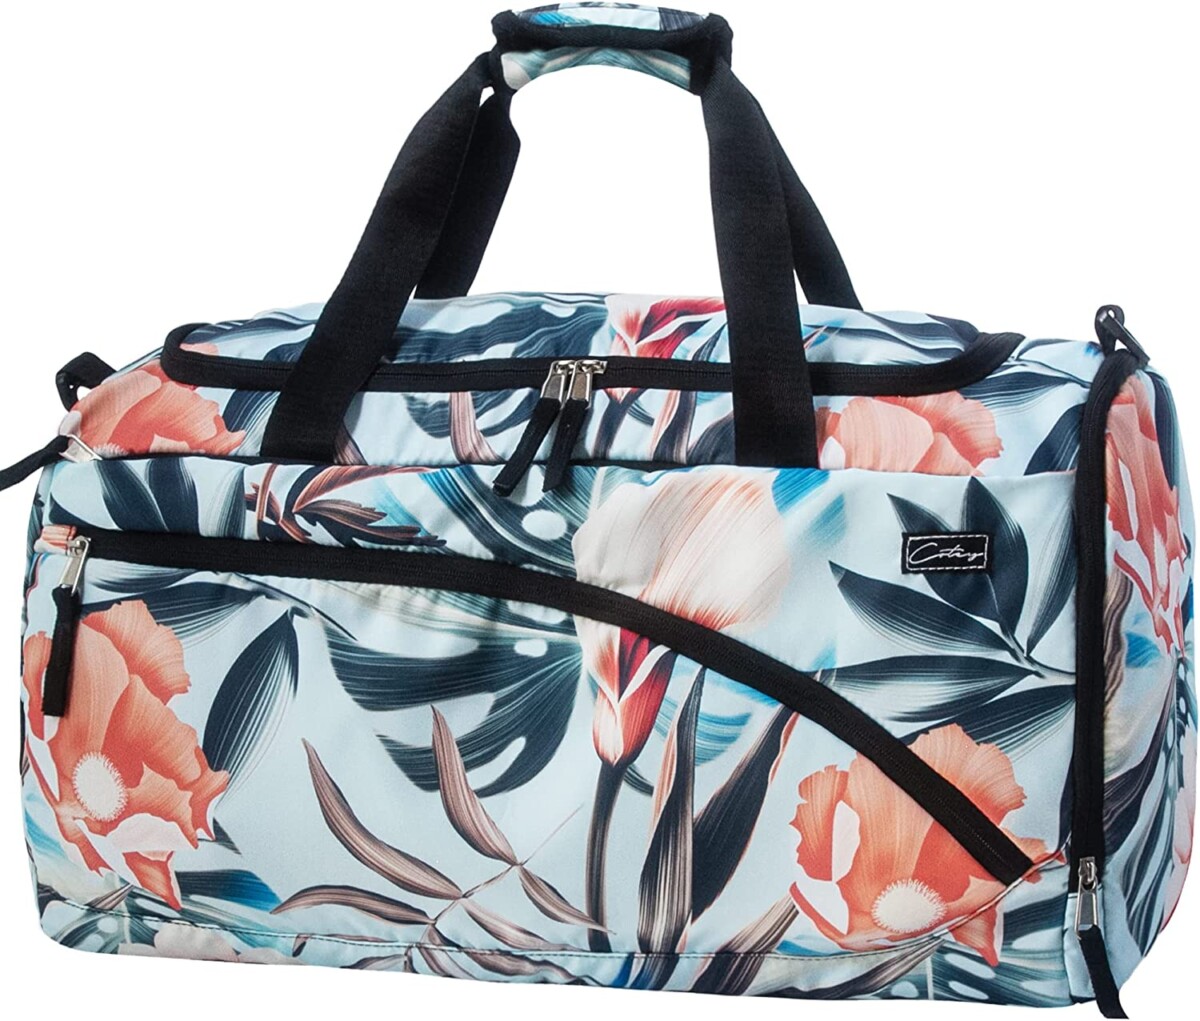 Alea's Deals 50% off Travel Duffle Womens Weekend Bag  